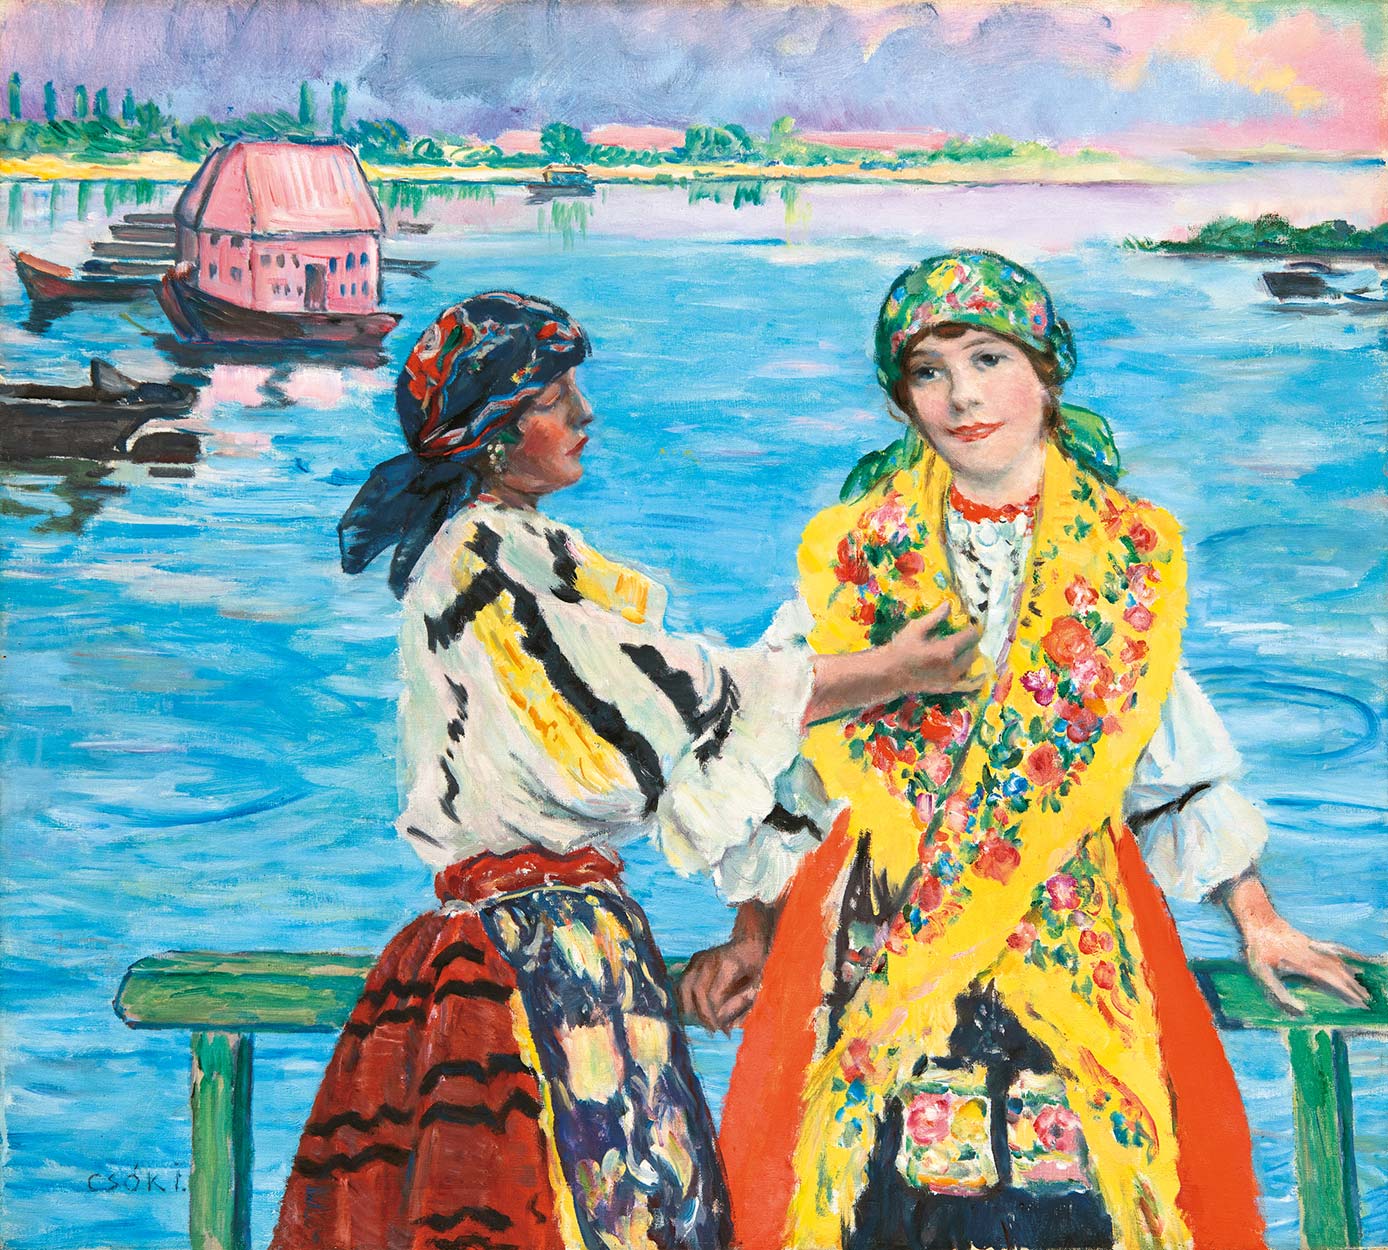 Csók István (1865-1961) Šokci Girls by the Danube Bank, 1905-1910